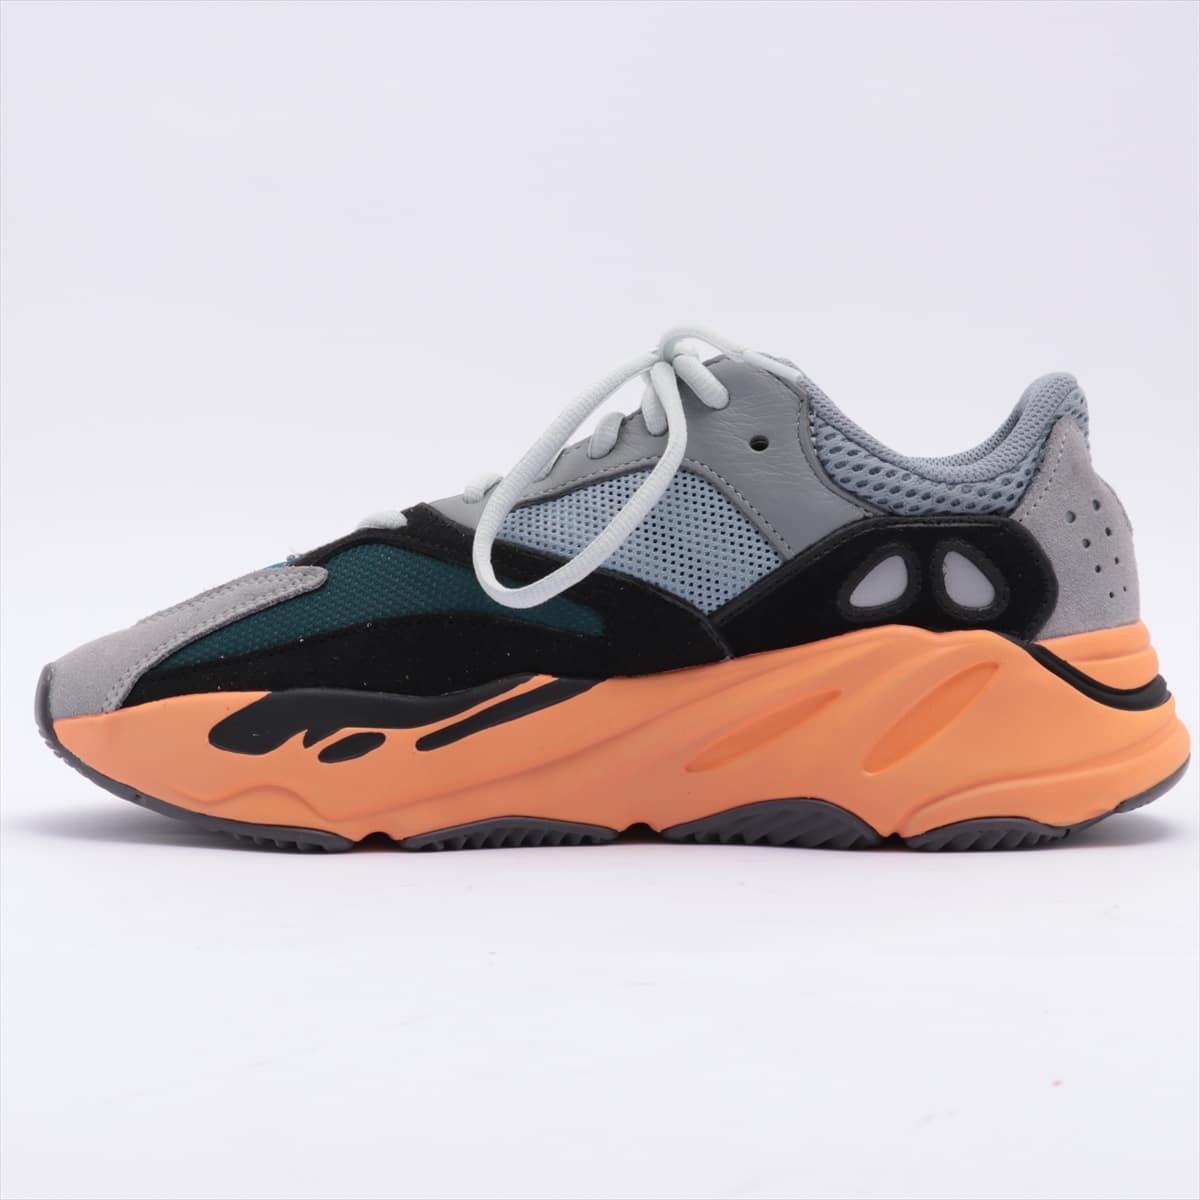 Adidas Leather & suede Sneakers 27.0㎝ Men's Multicolor YEEZY BOOST700 GW0296